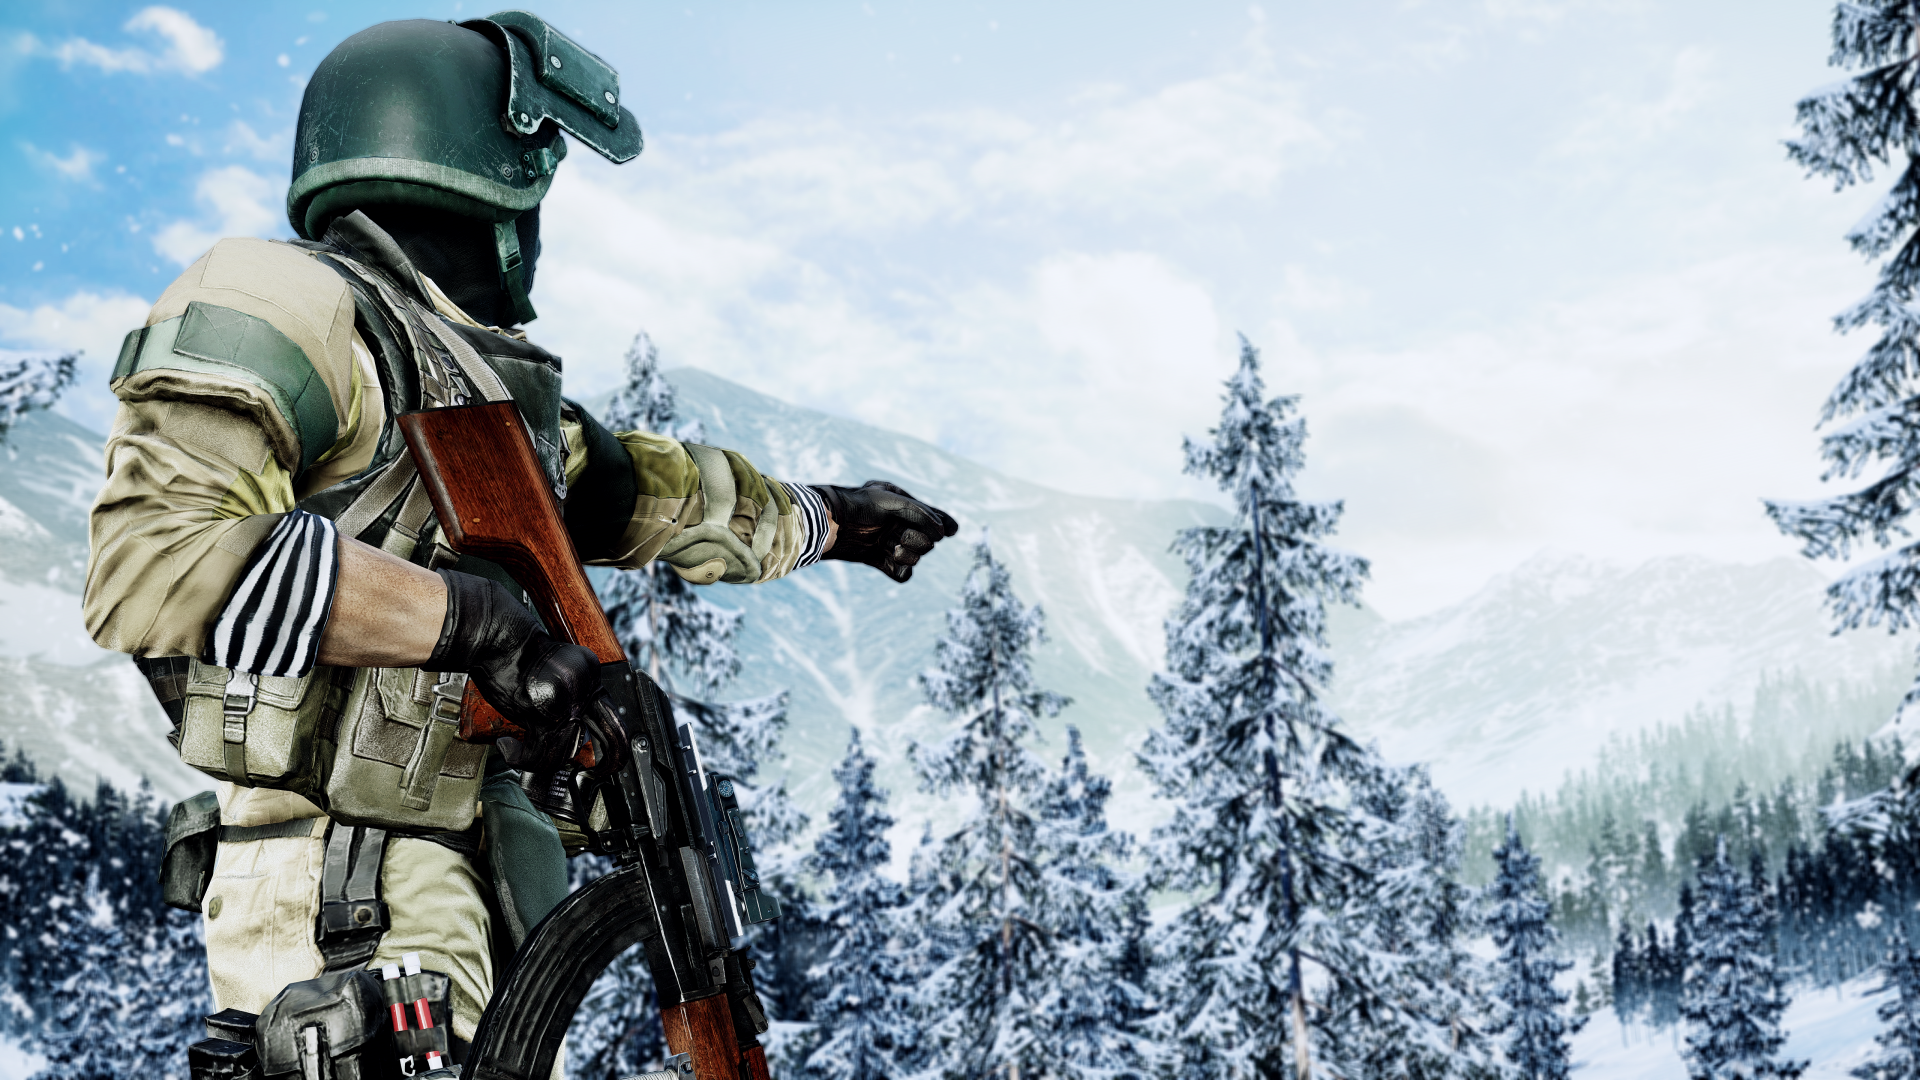 Download Weapon Soldier Video Game Battlefield 4 4k Ultra HD Wallpaper ...